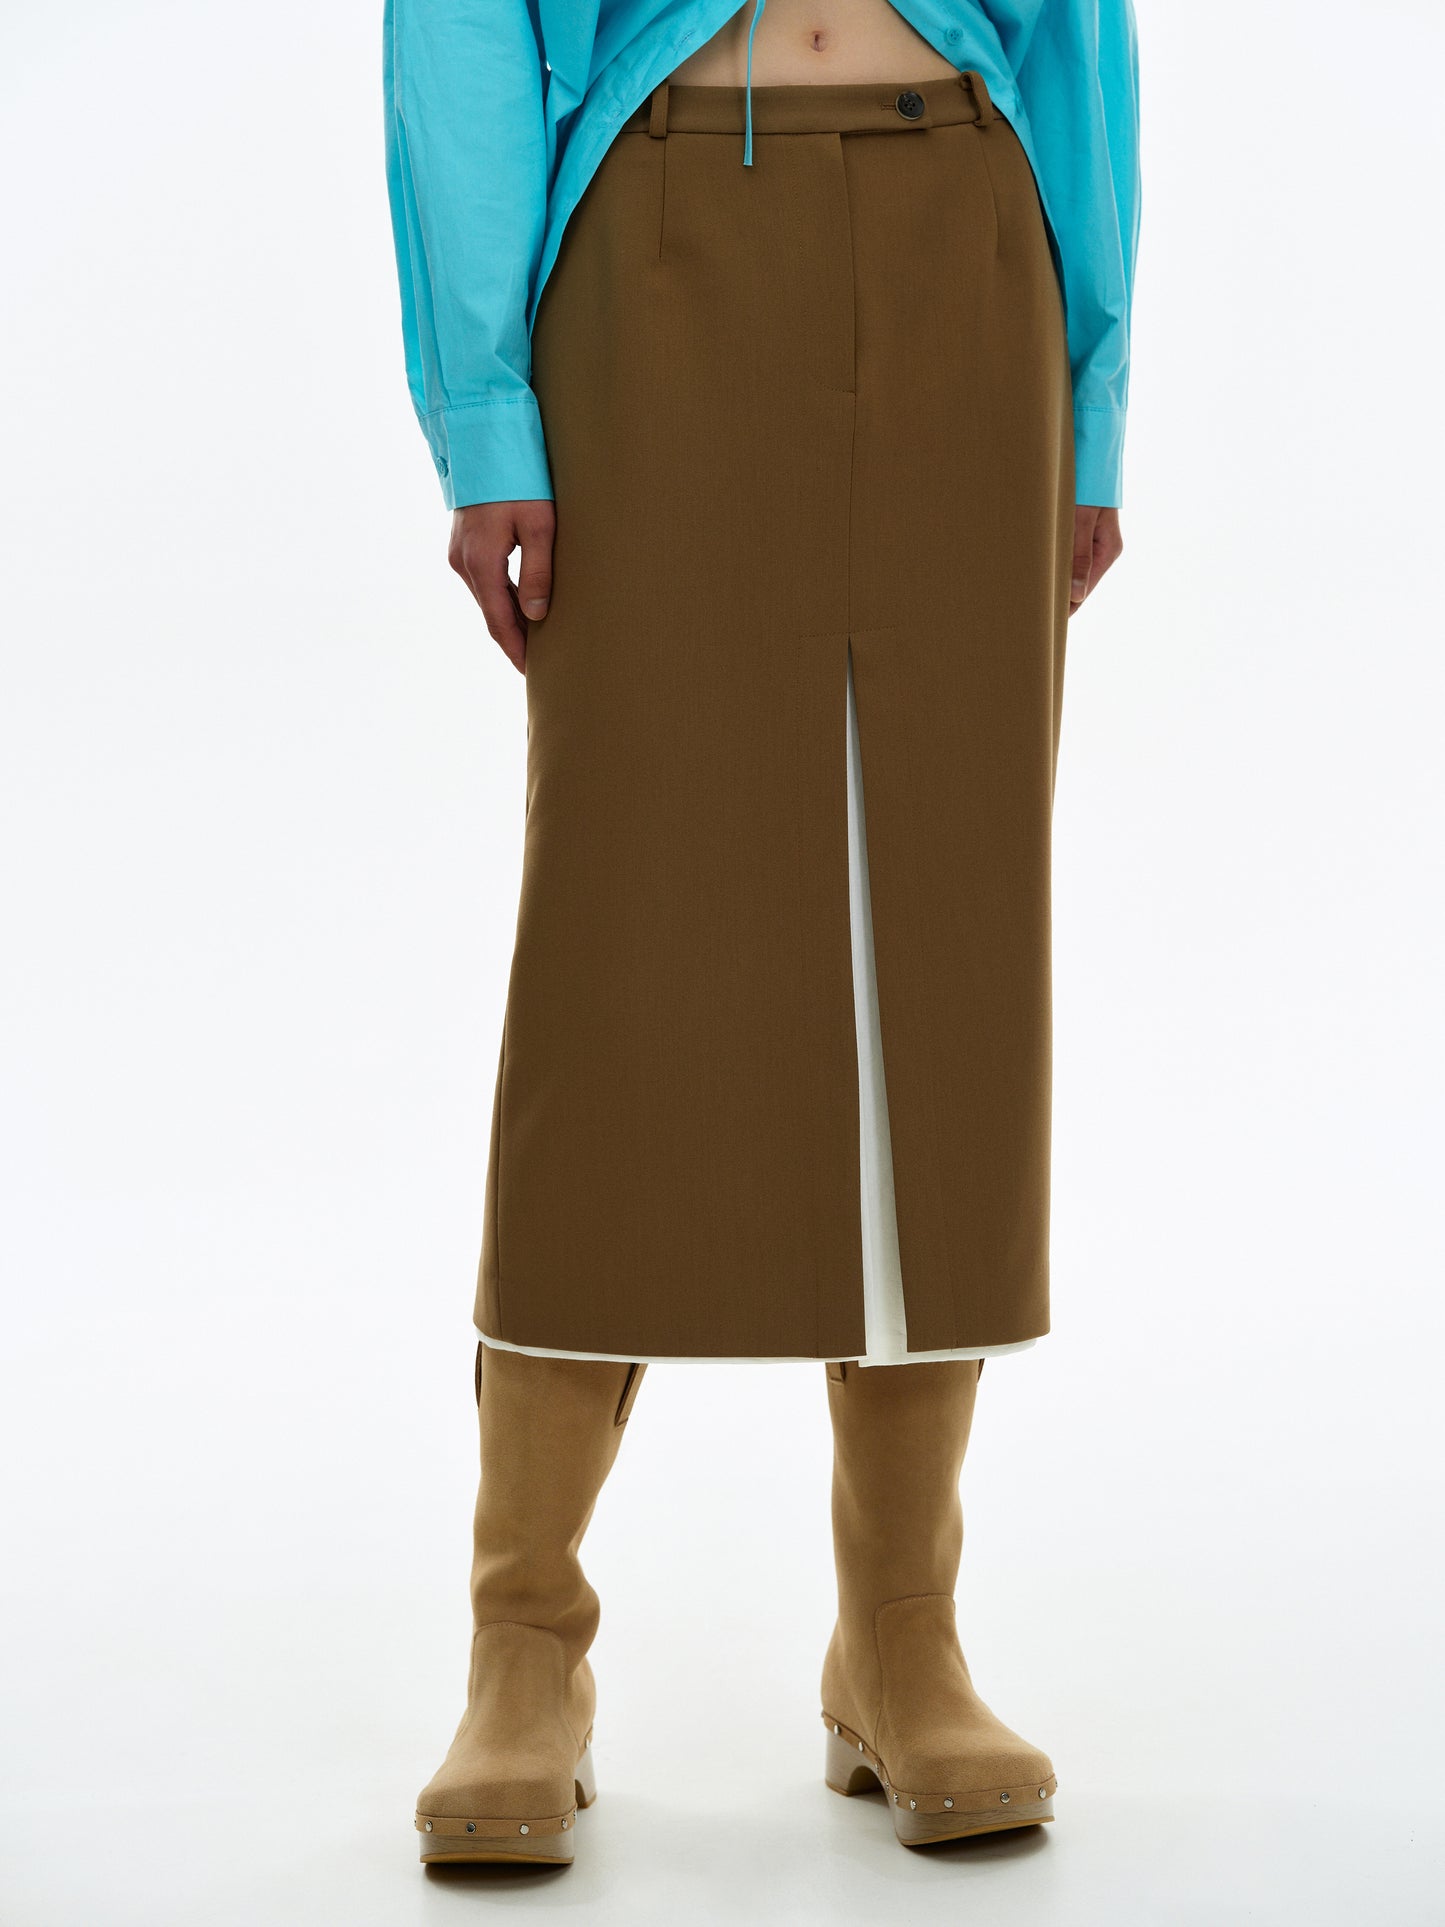 Duo Paneled Skirt, Brown